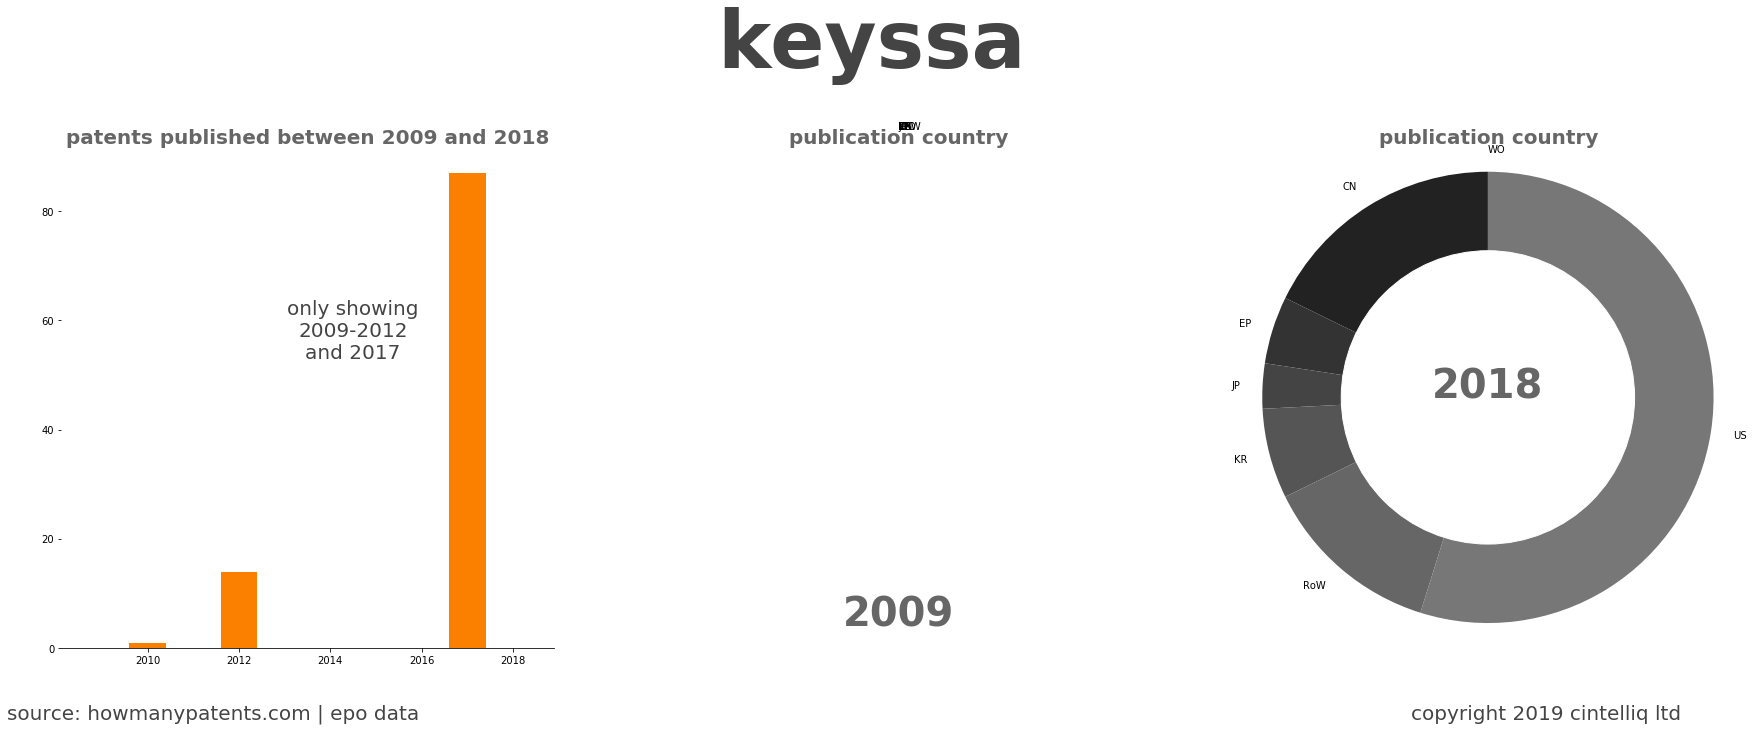 summary of patents for Keyssa